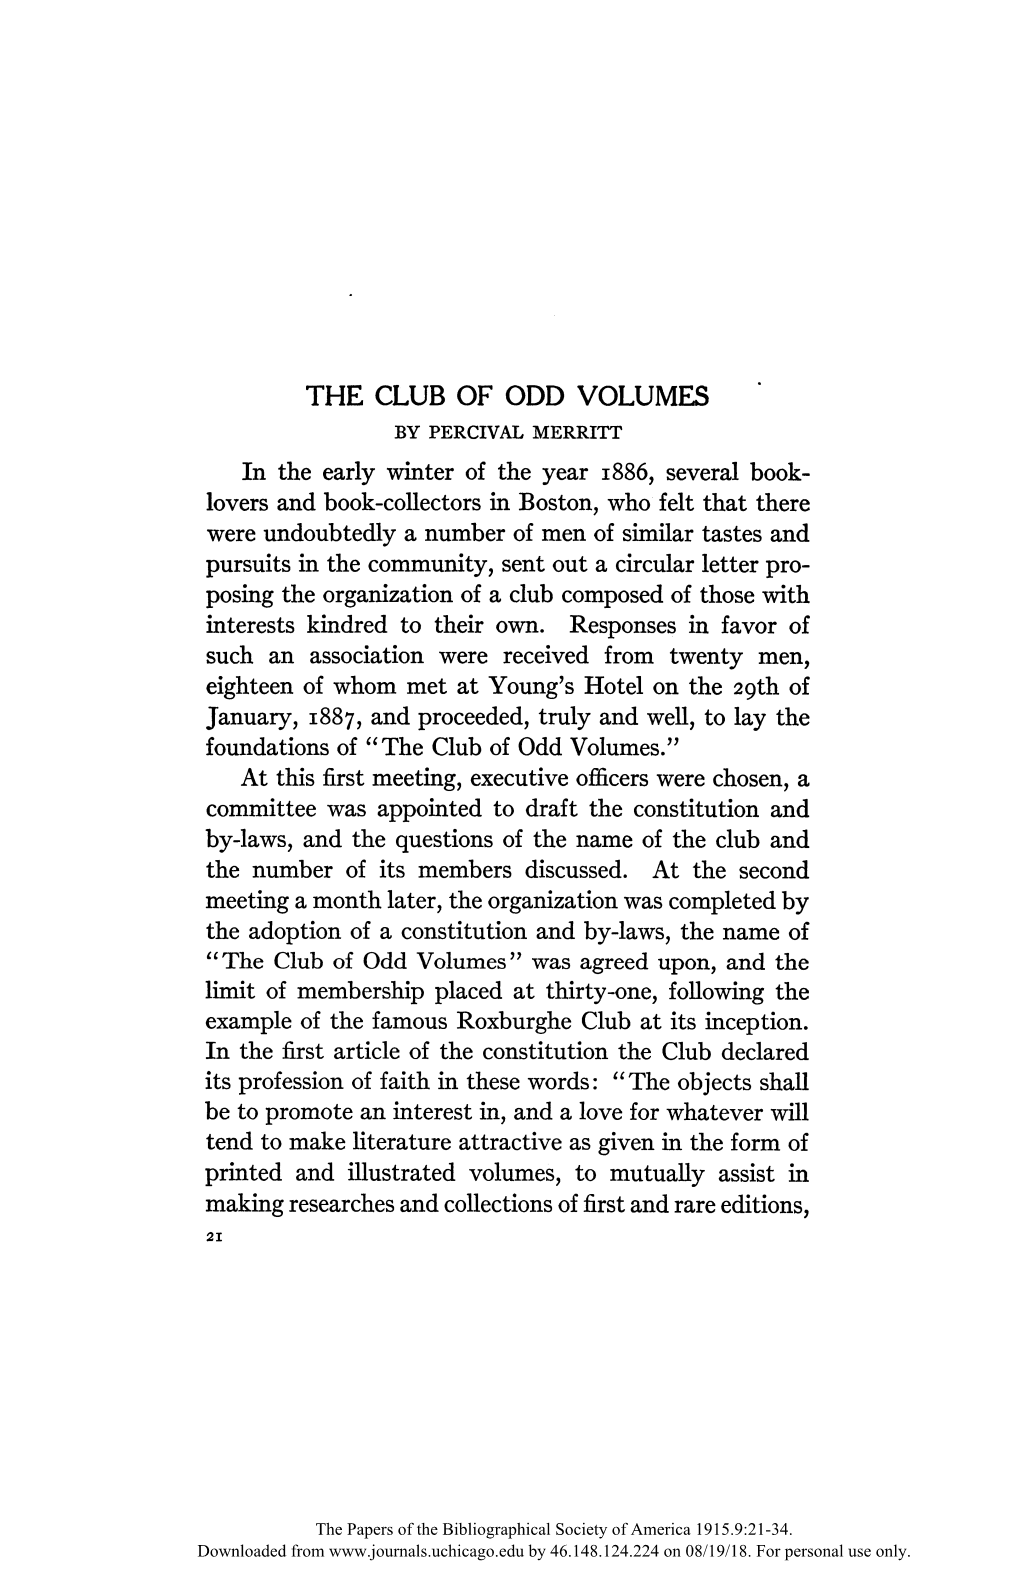 The Club of Odd Volumes